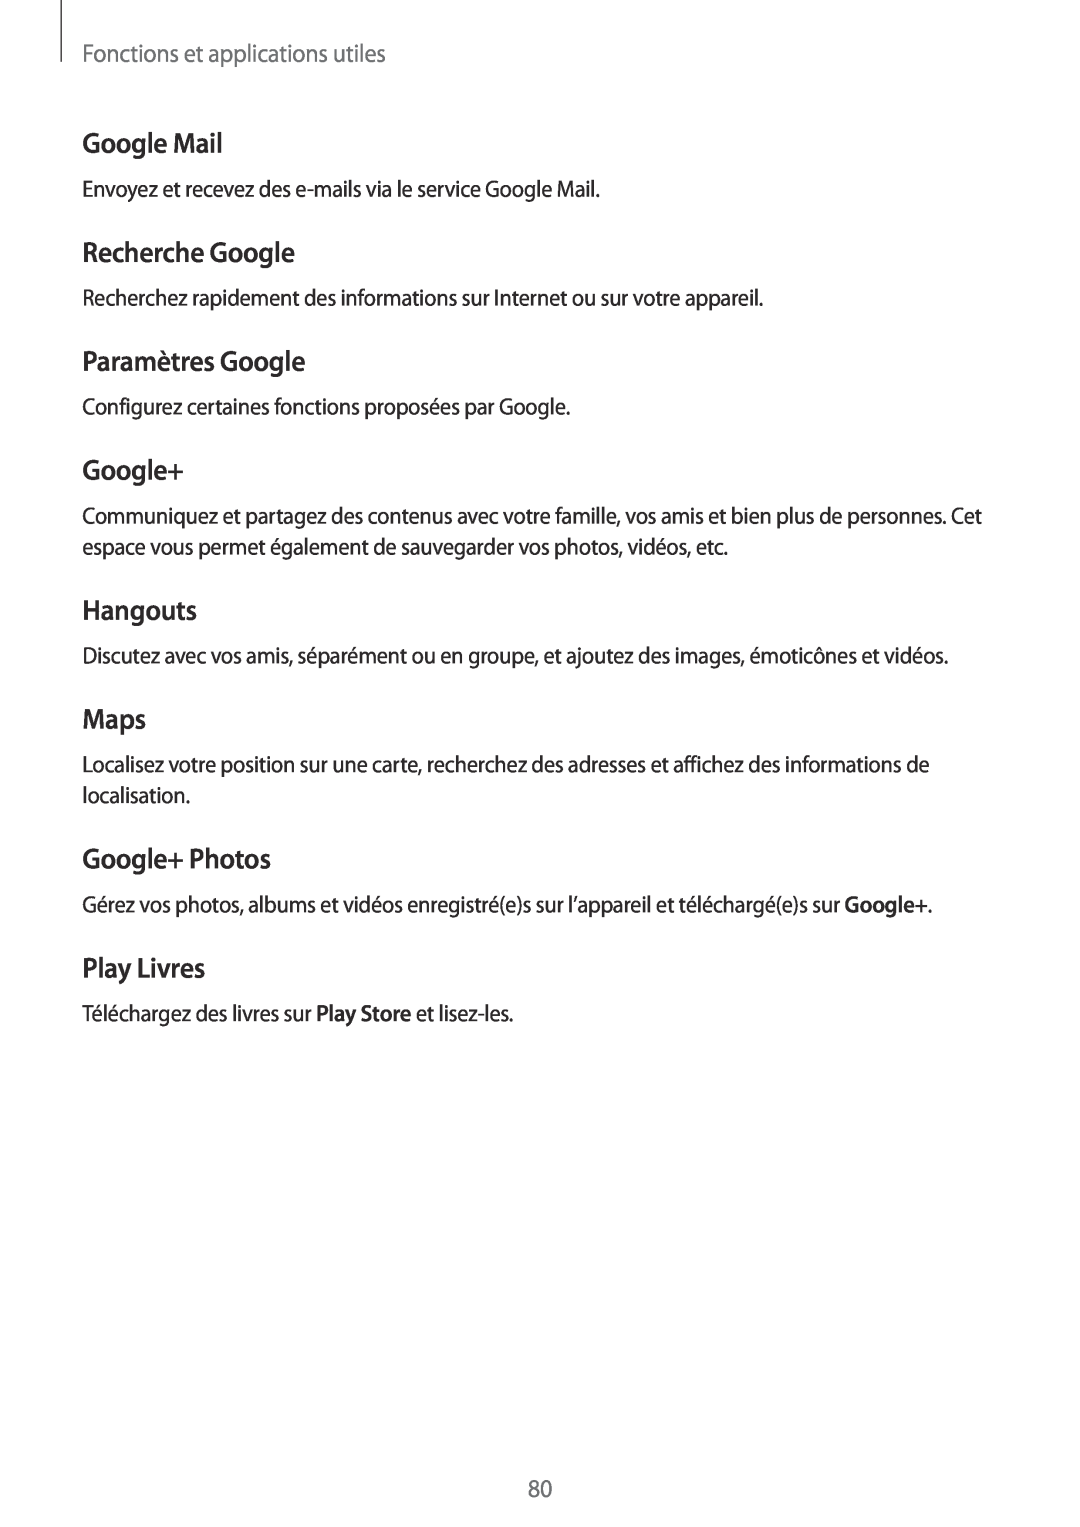 Samsung SM-G357FZAZSFR Google Mail, Recherche Google, Paramètres Google, Hangouts, Maps, Google+ Photos, Play Livres 